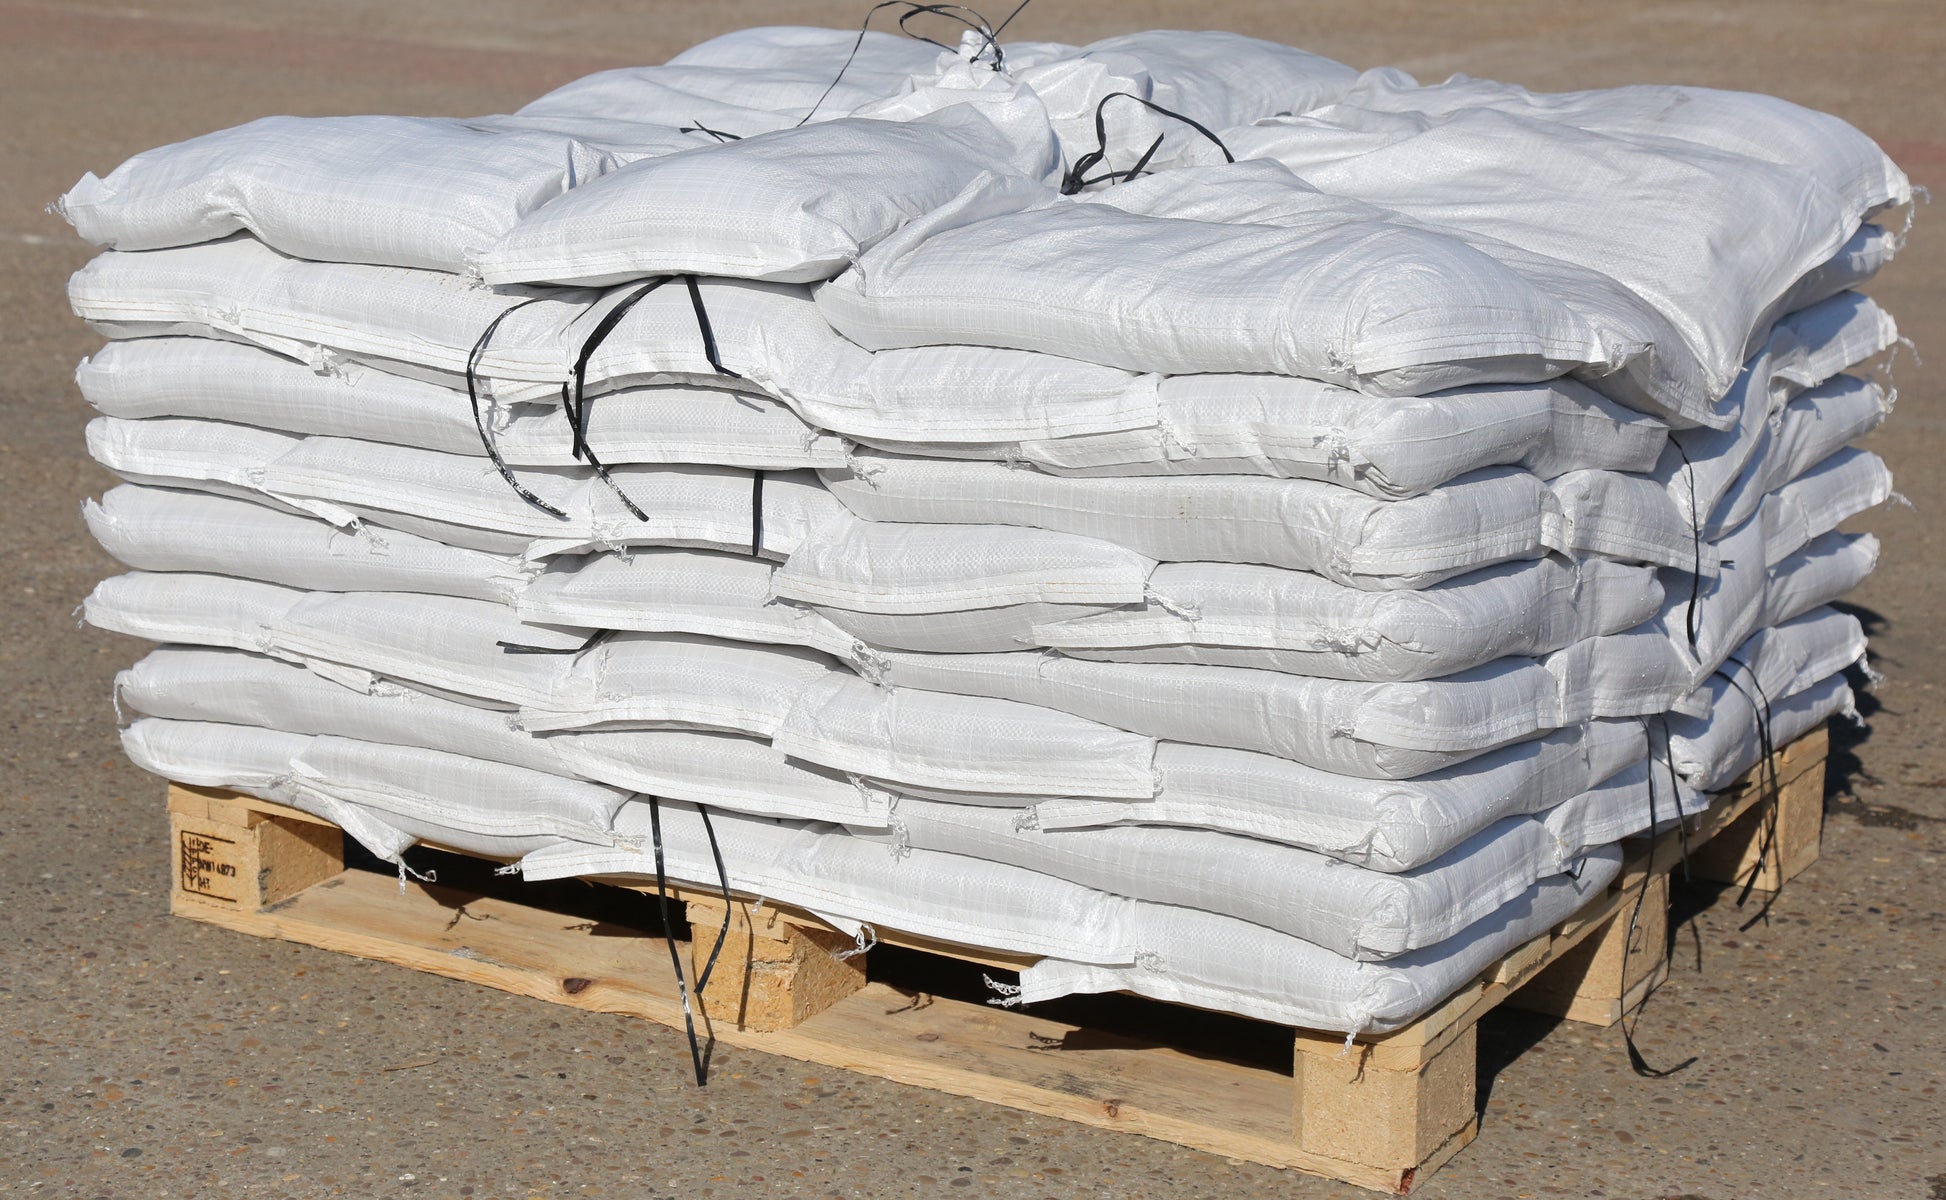 A pallet of standard white woven polypropylene filled sandbags